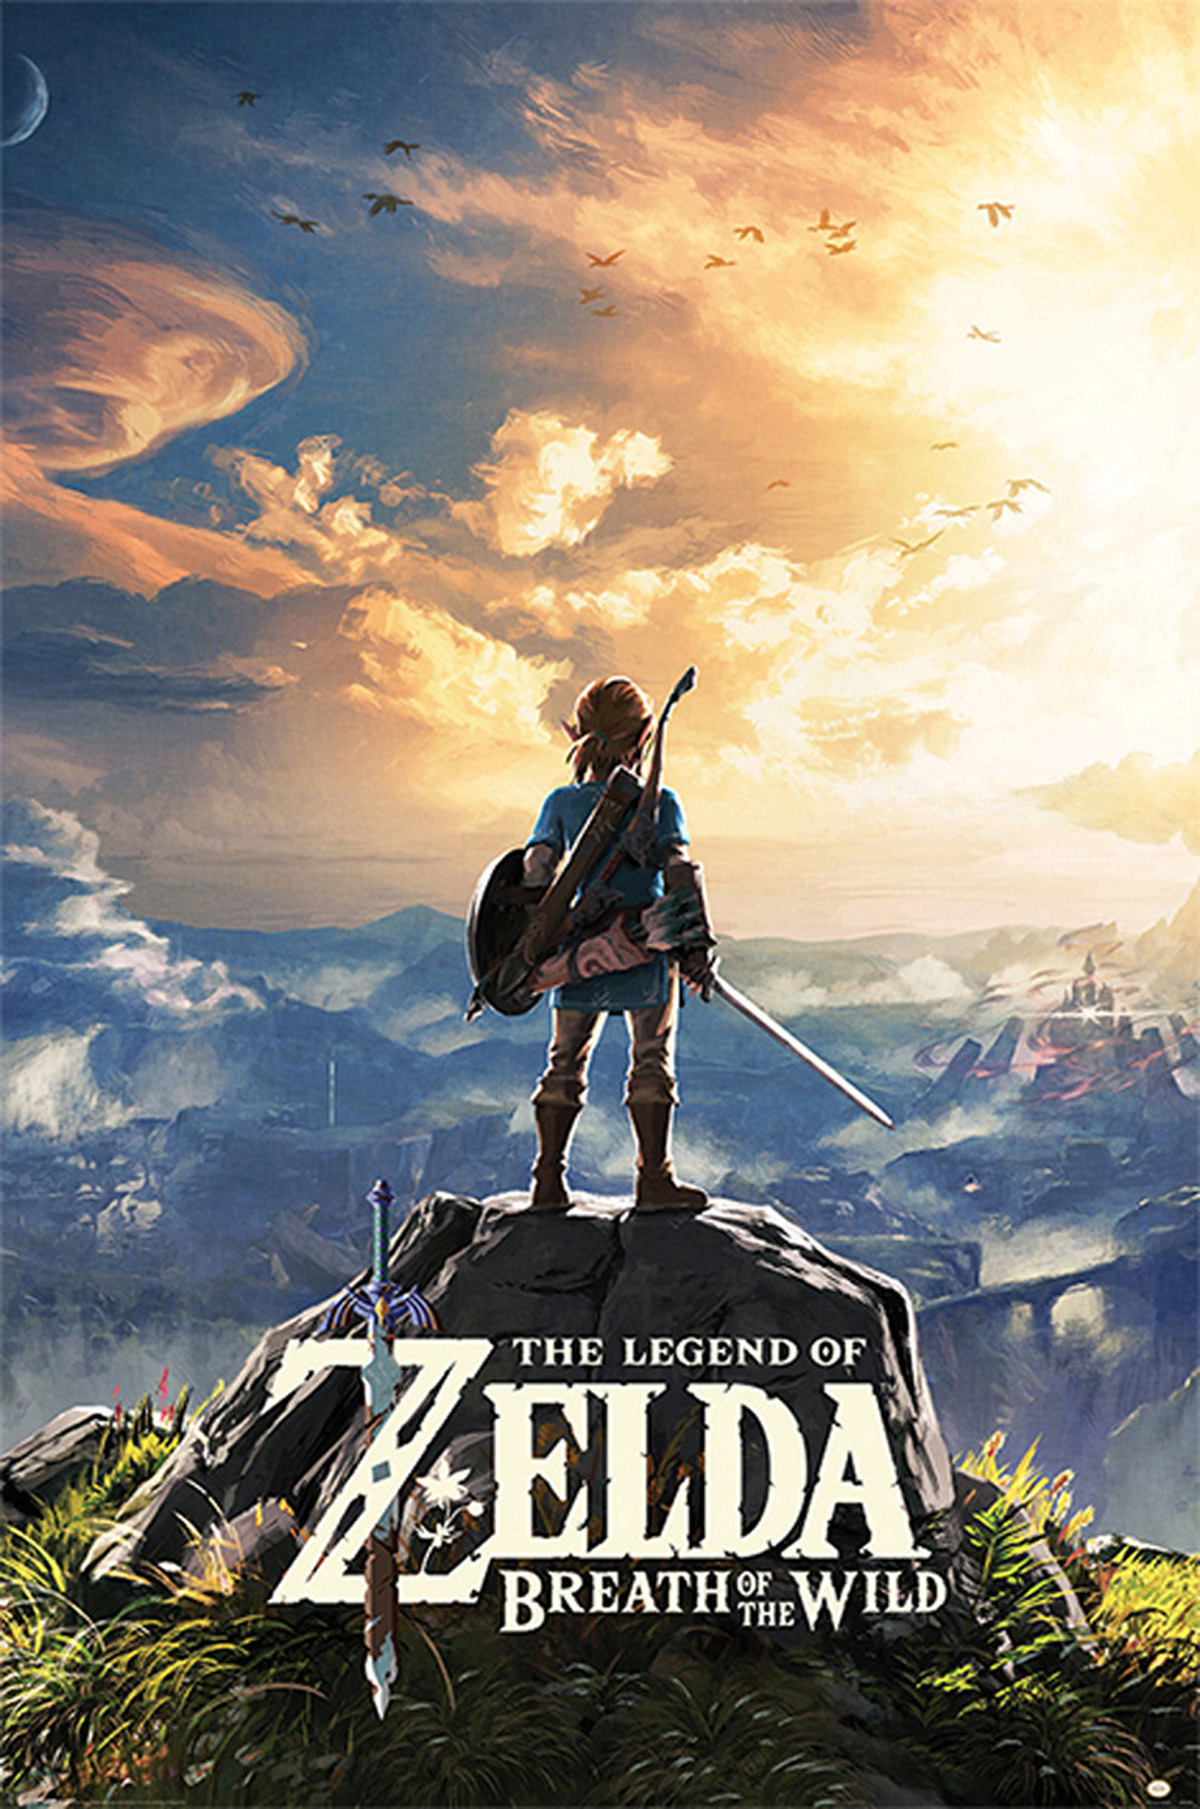 Sunset - Legend Wild The of - Zelda, the Breath of